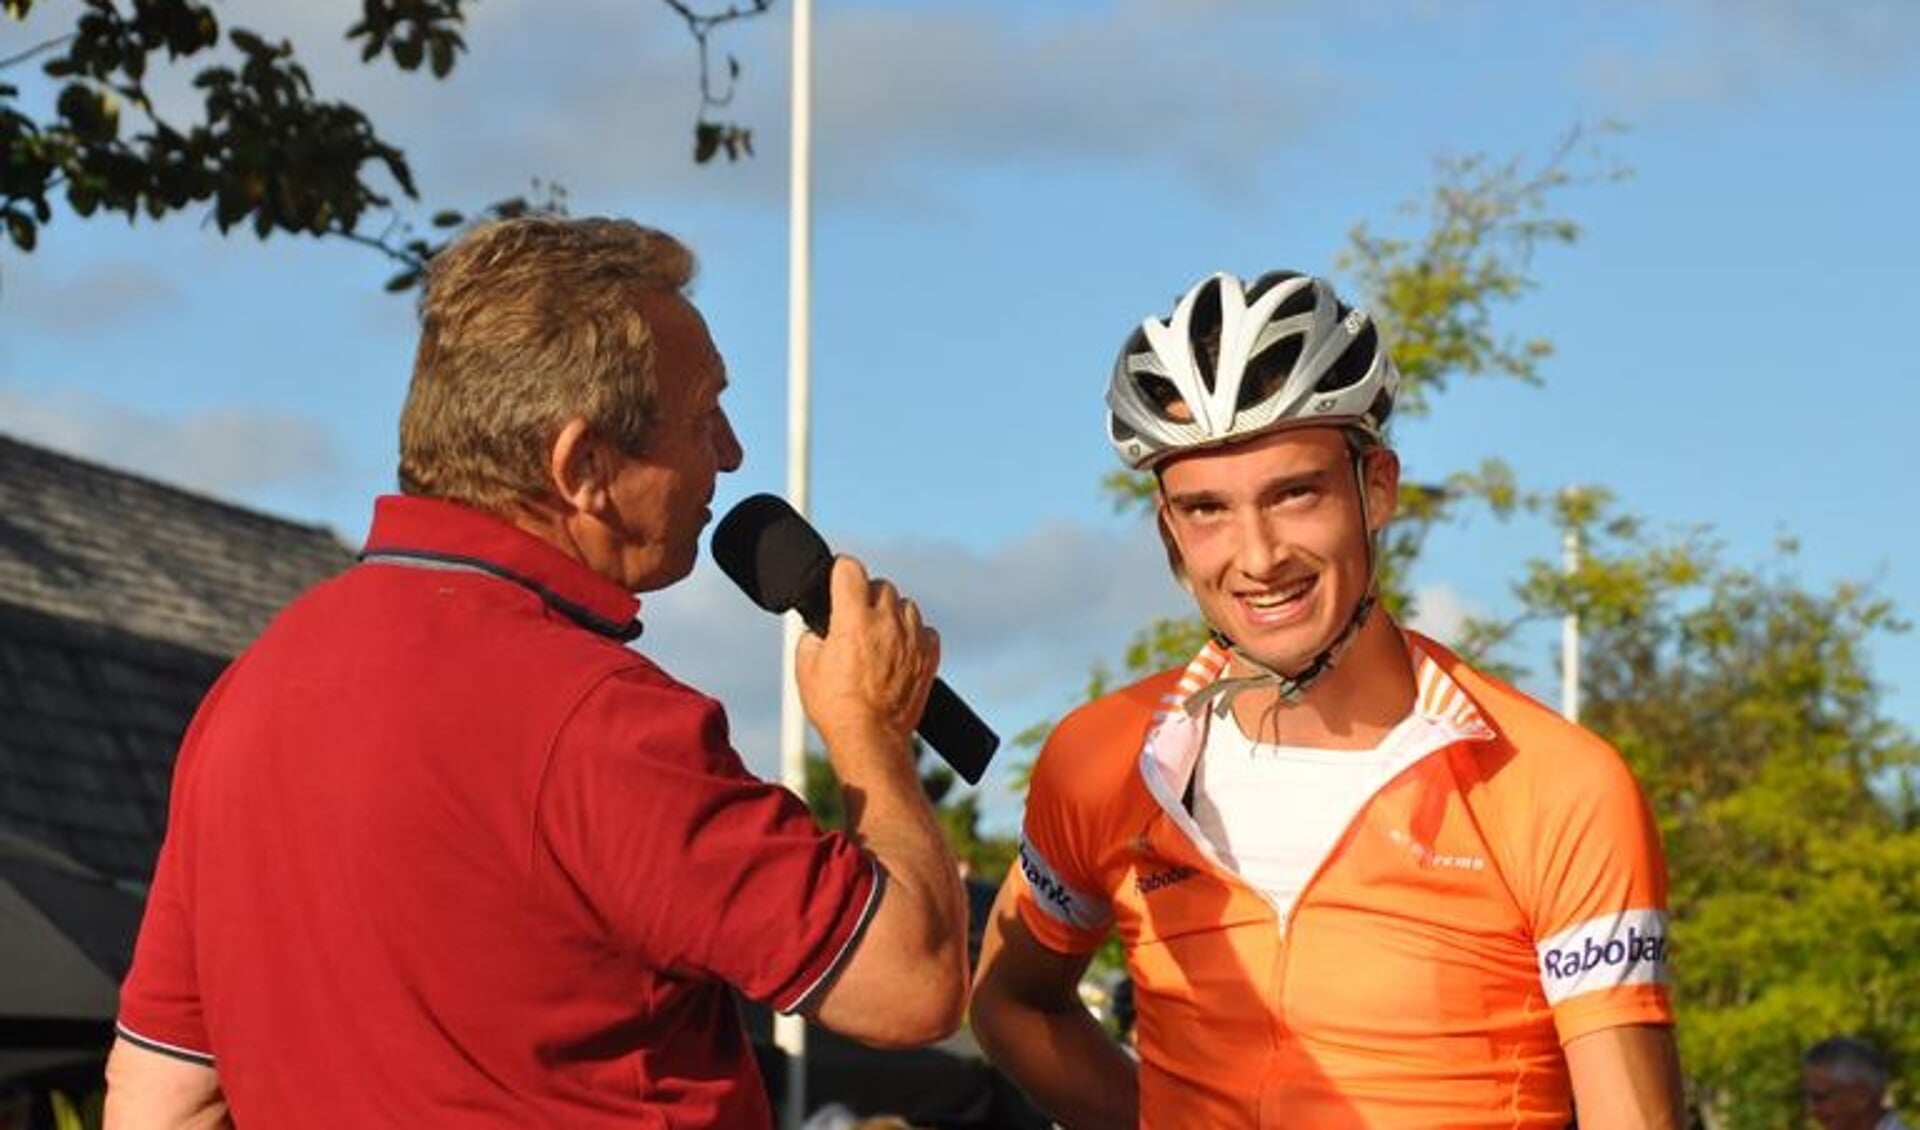 Speaker Piet Bolier in gesprek met winnaar Thijs Zuurbier. (Foto: Mikel Knippenberg)